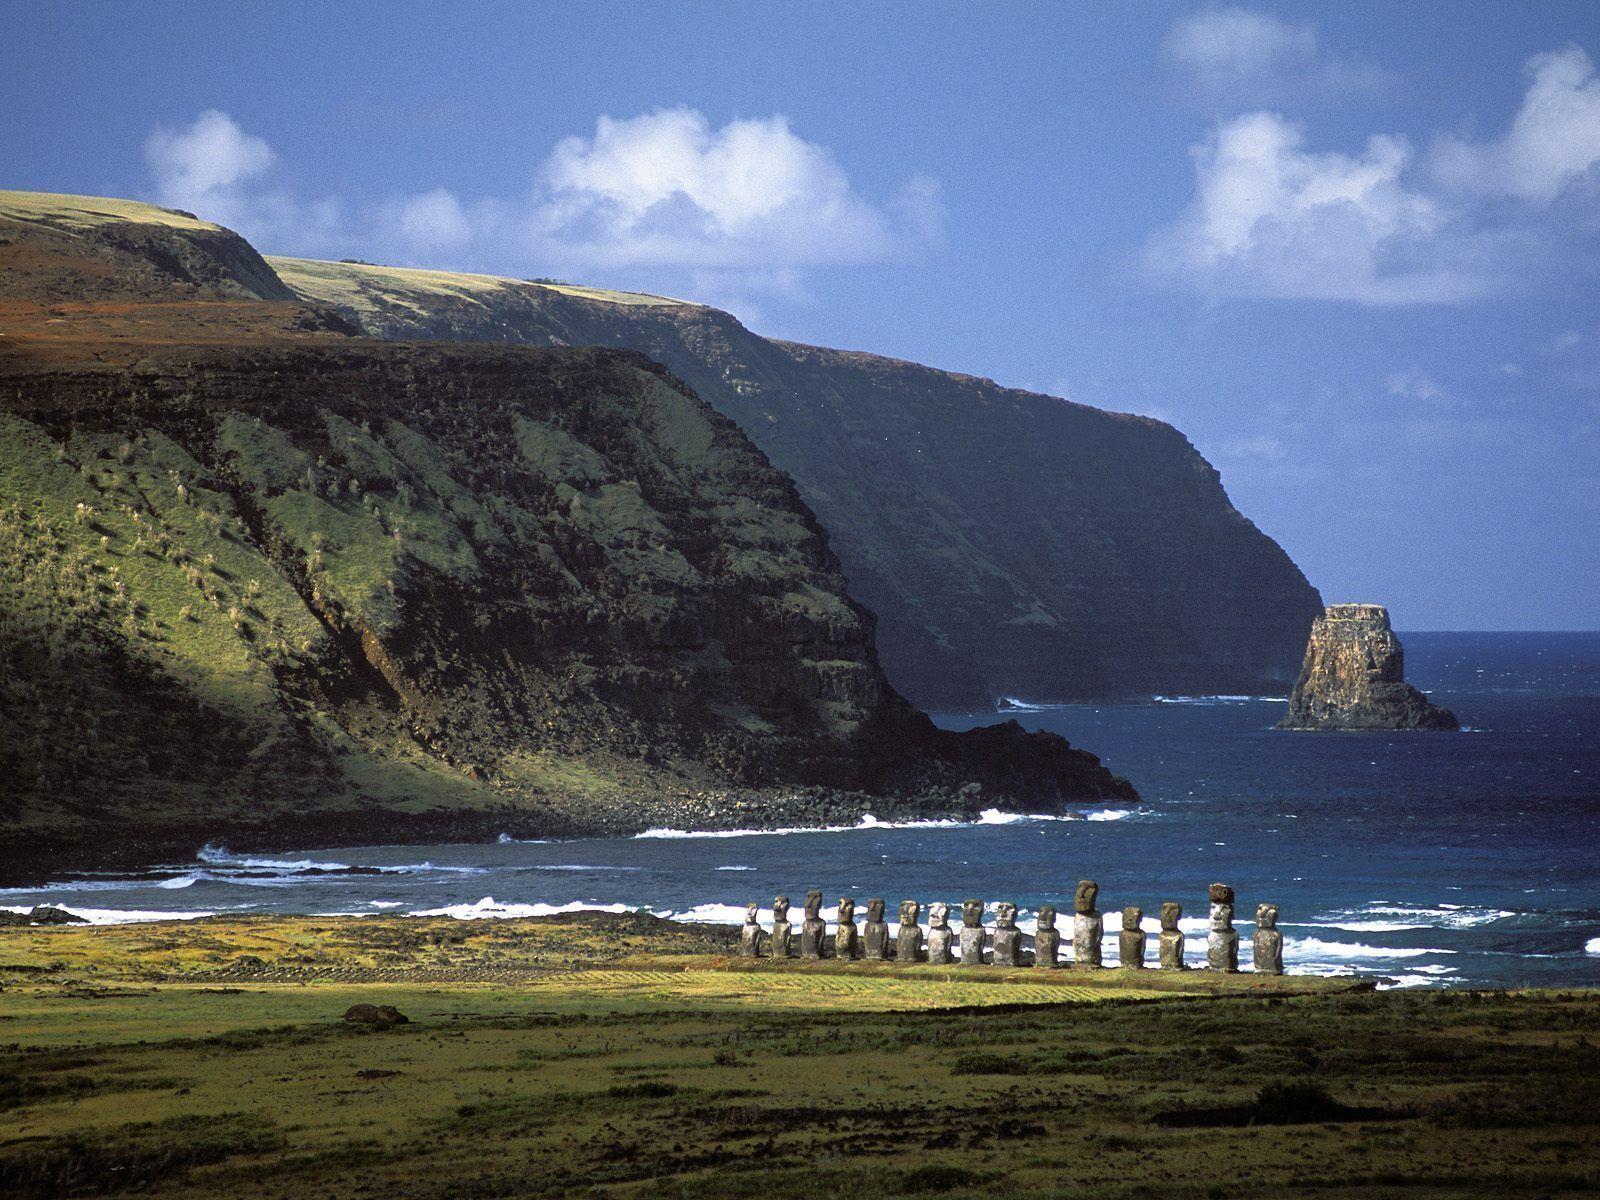 Hd Wallpaper Moai Statues Easter Island Chile 1024 X 768 108 Kb